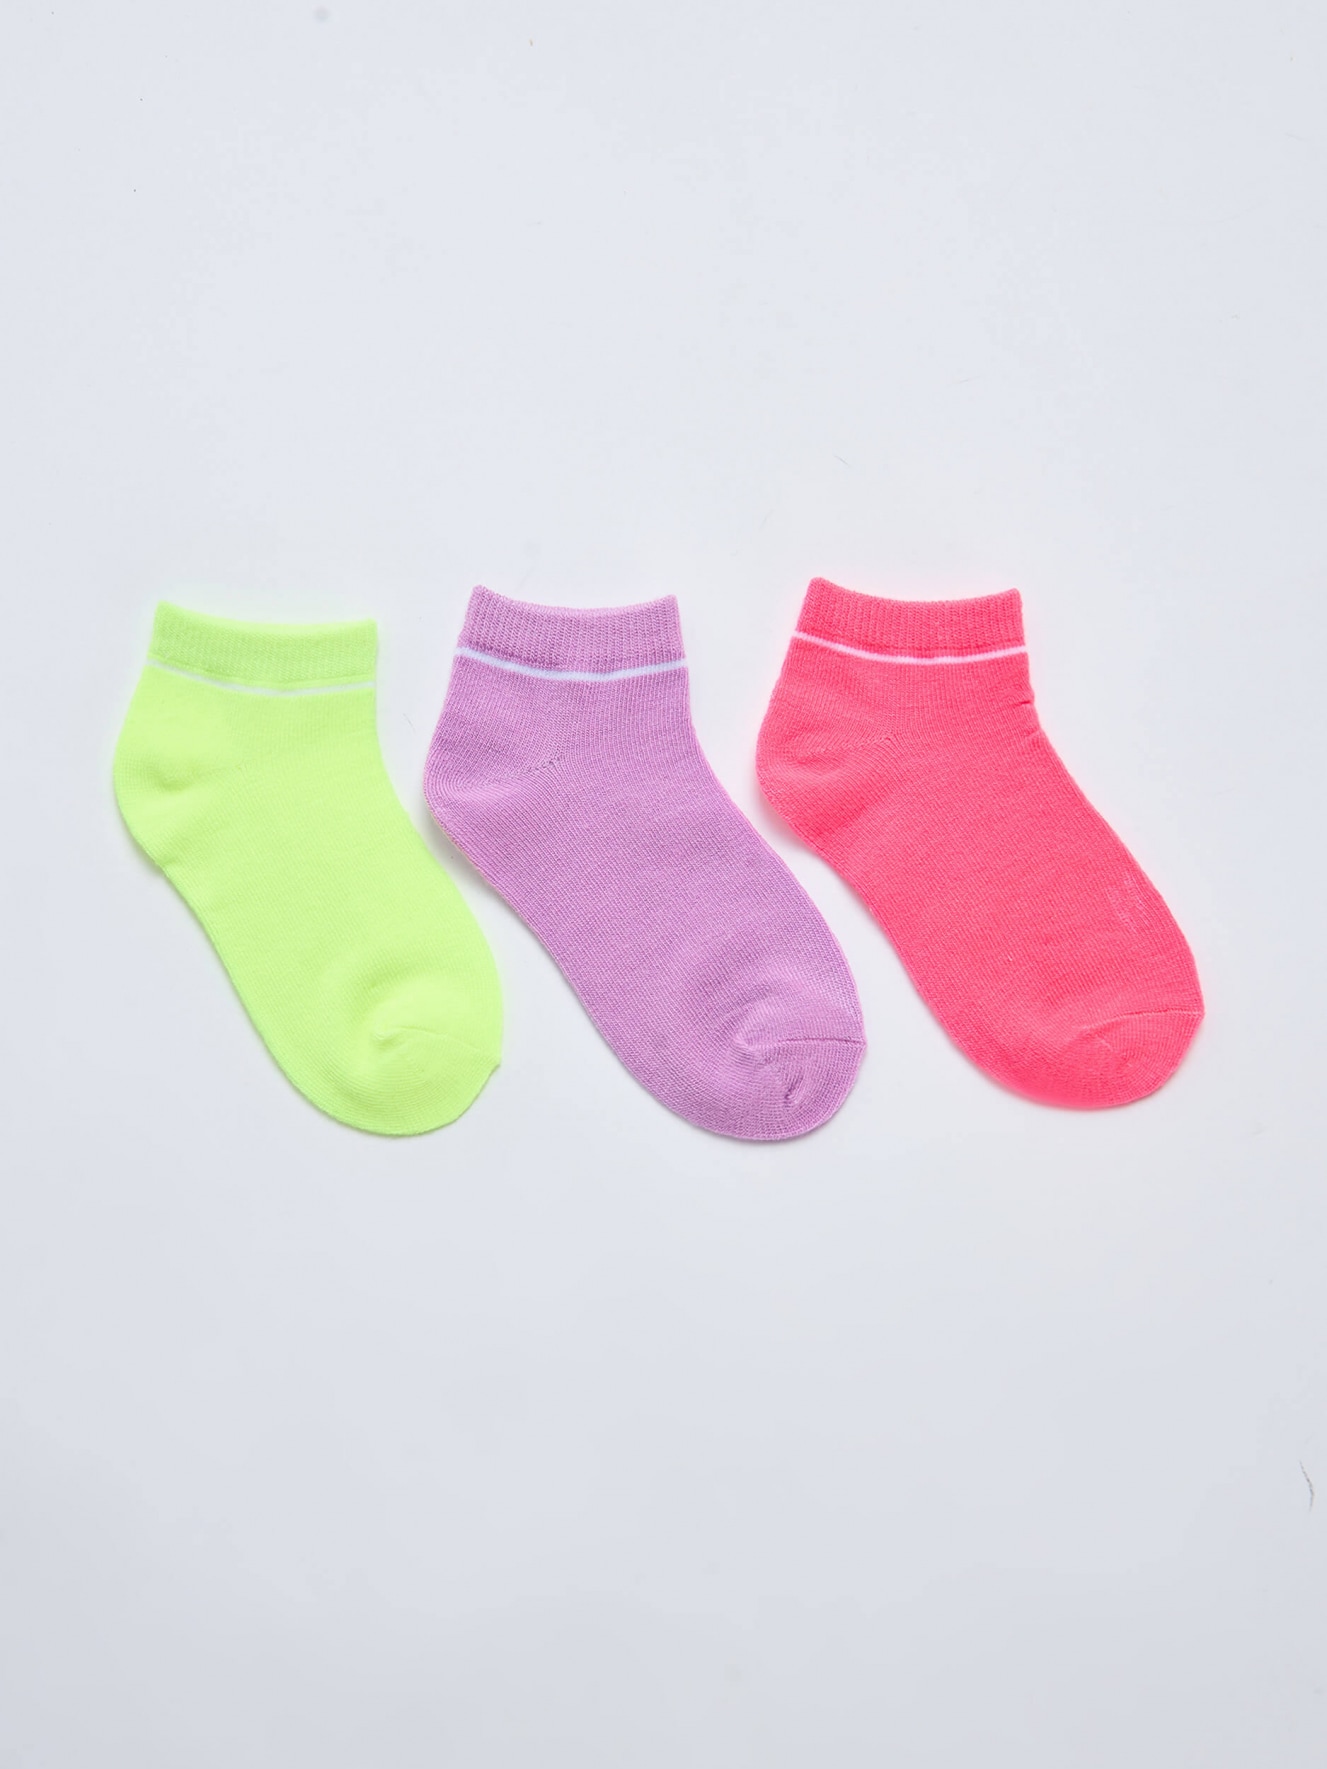 Rosa fluor calcetines de color liso